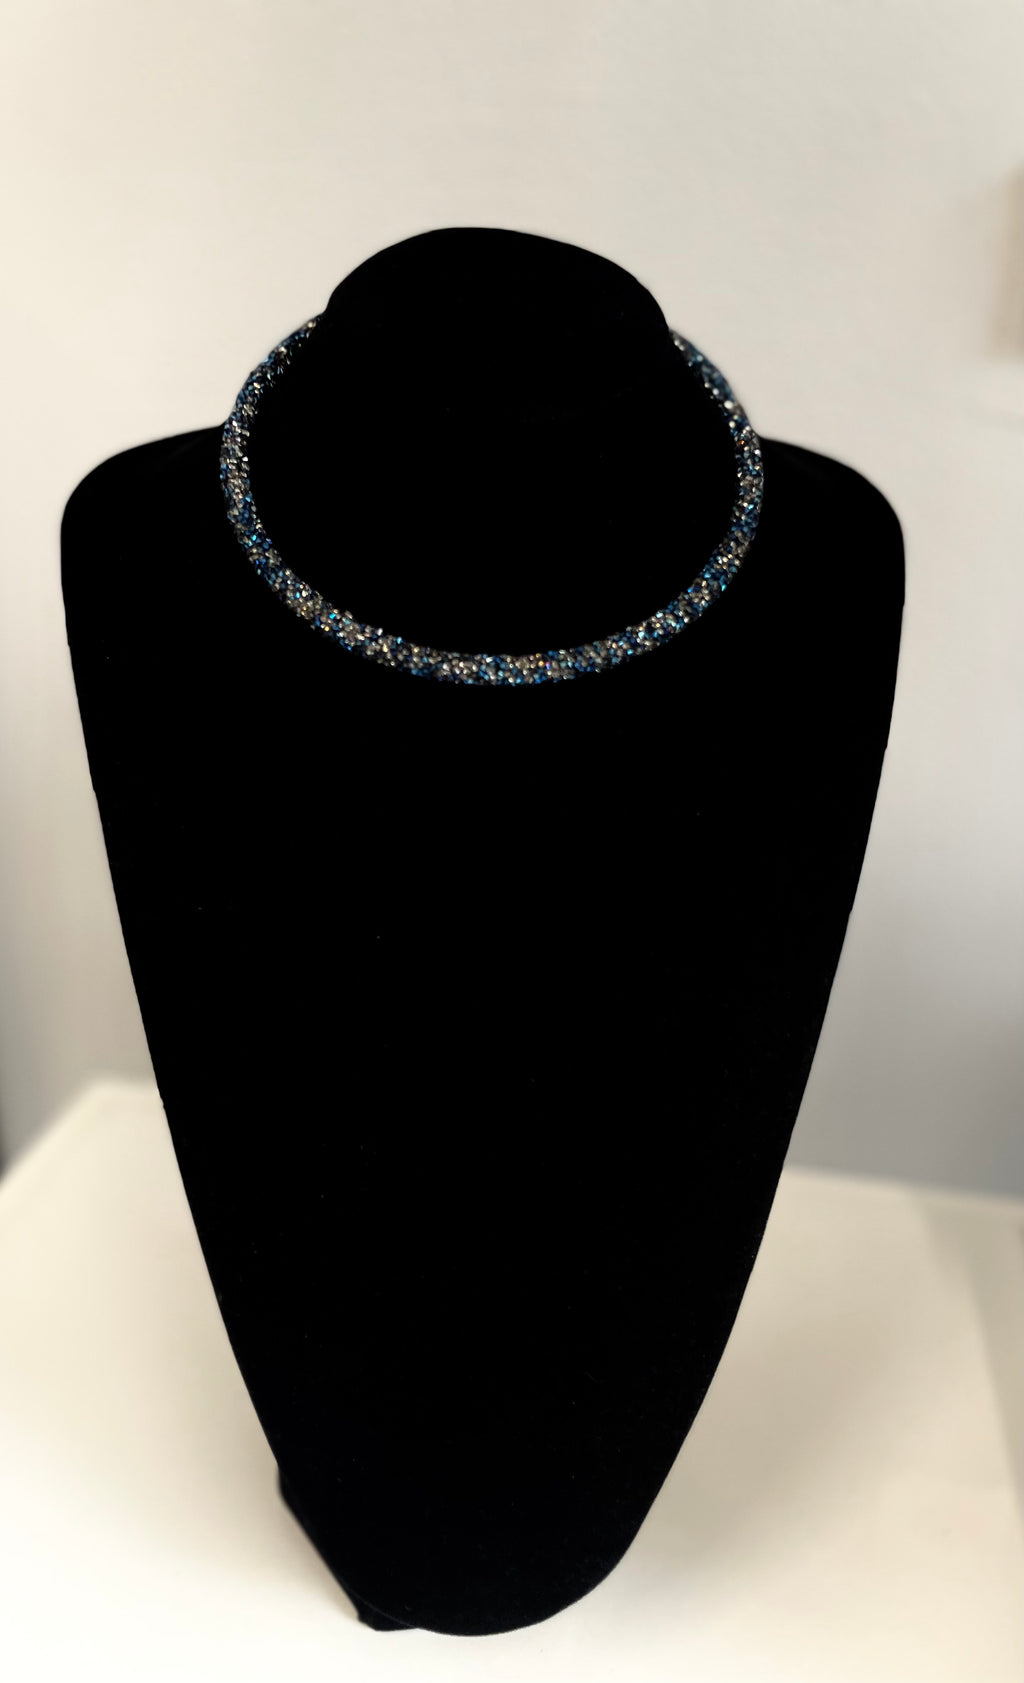 Voila - non metal necklace